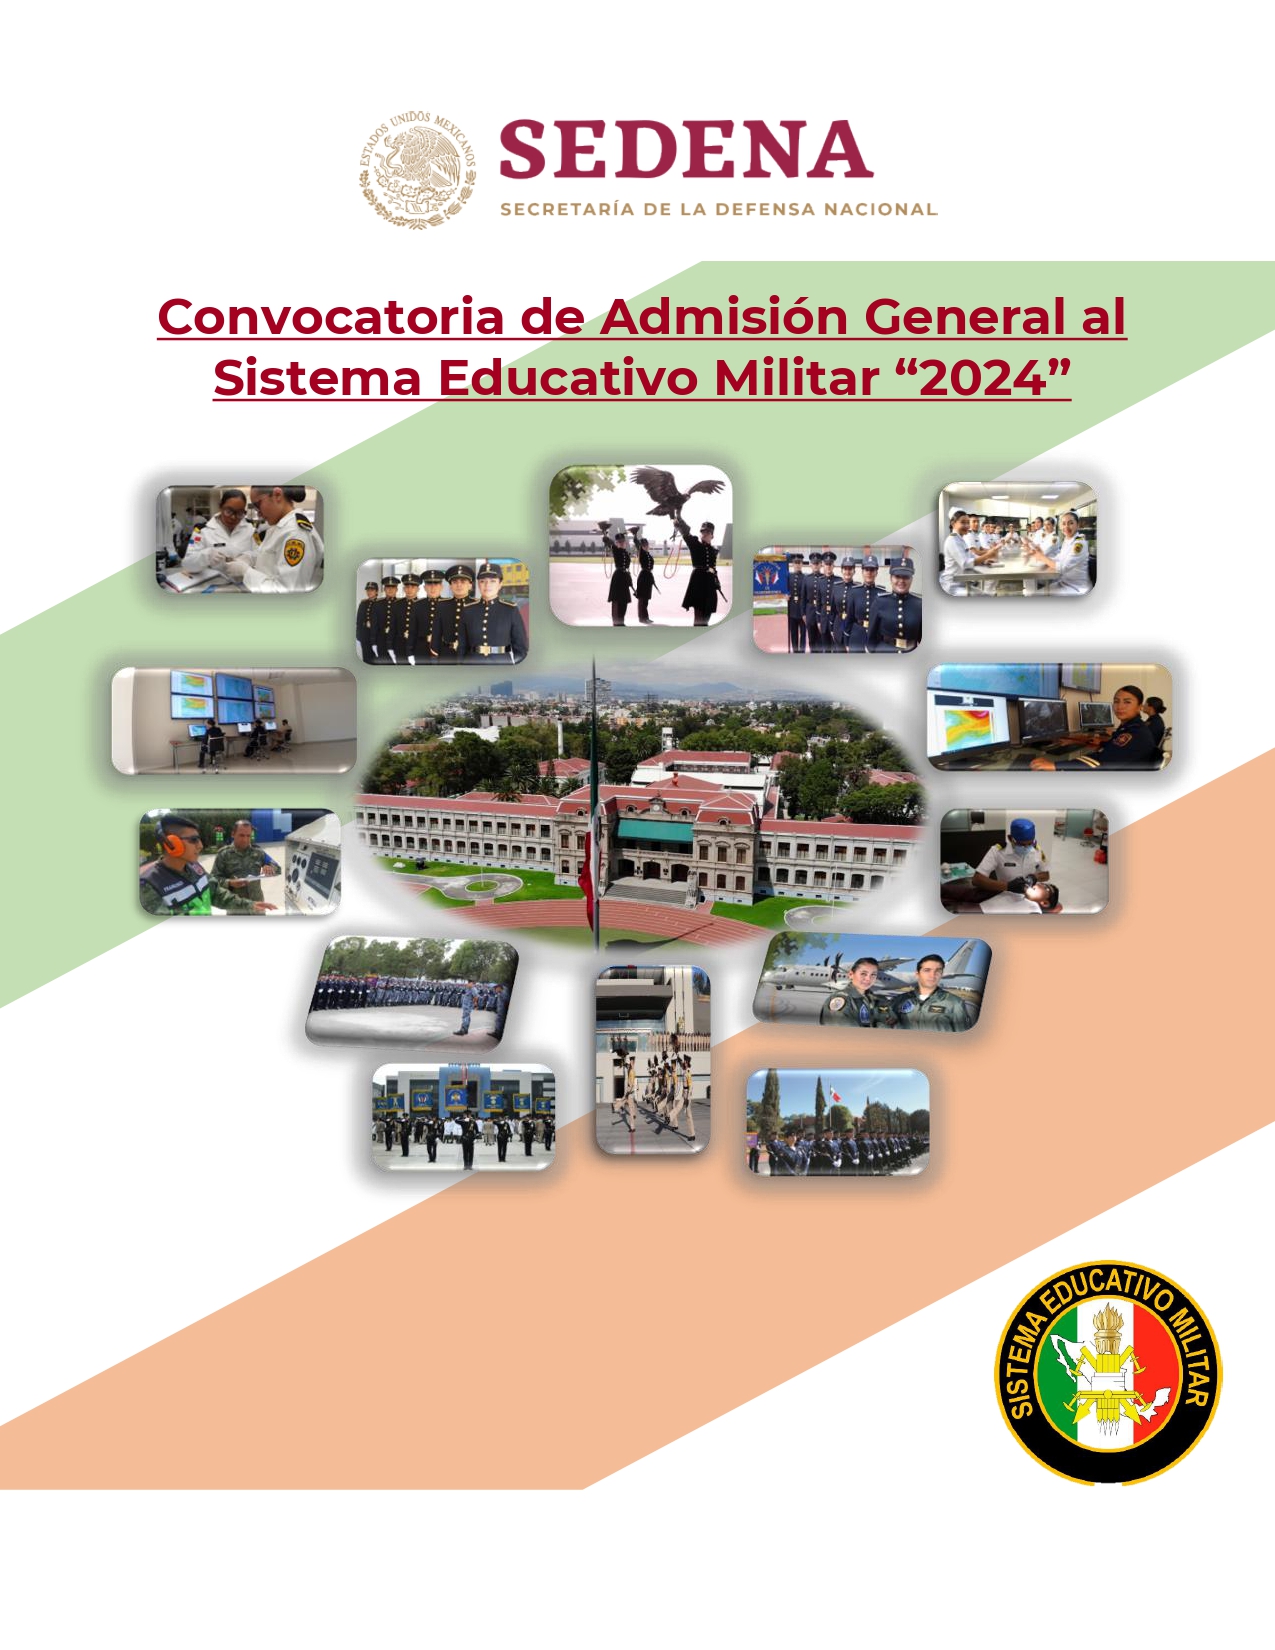 SEDENA convocatoria 2024 ejército Sistema Educativo Militar 